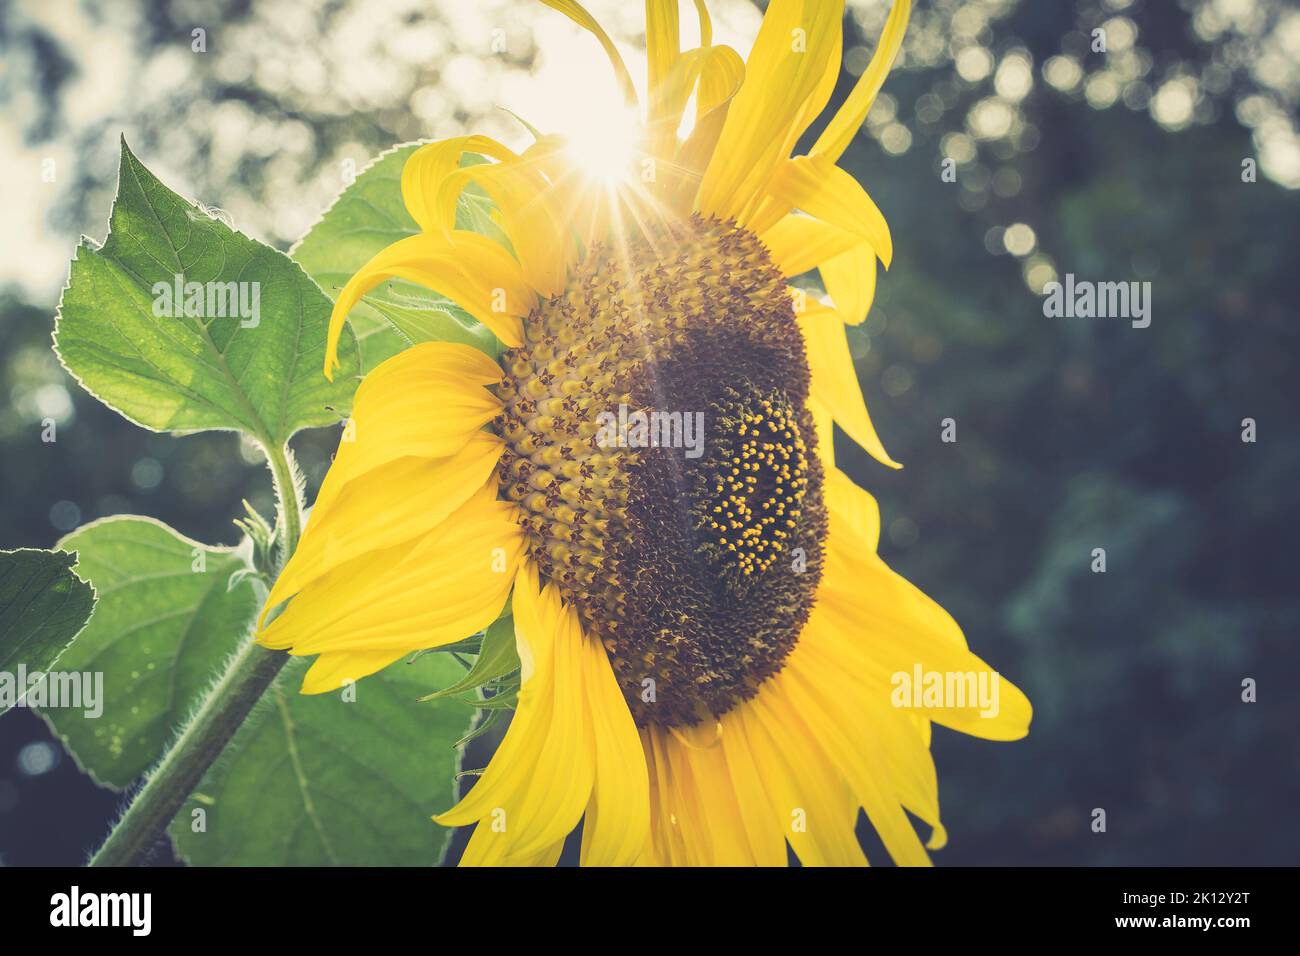 Sunburst through a sunflower with a vintage effect. Stock Photo